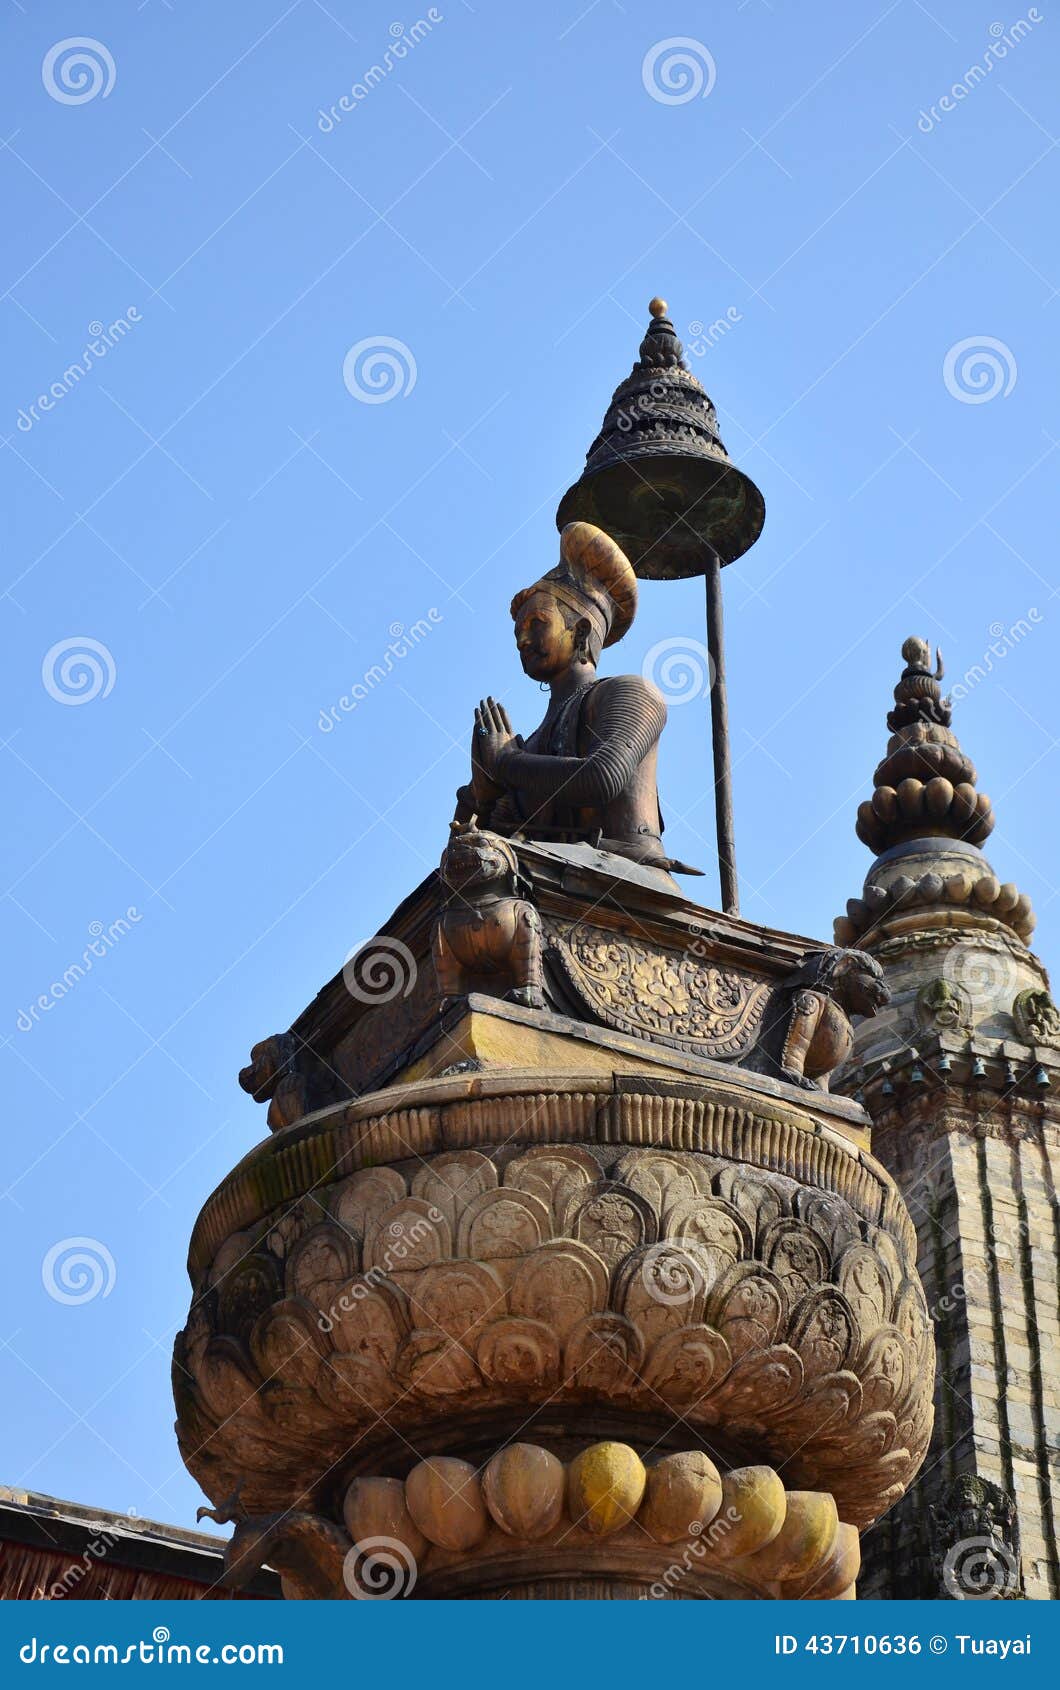 statue image king ranjit malla in bhaktapur durbar square